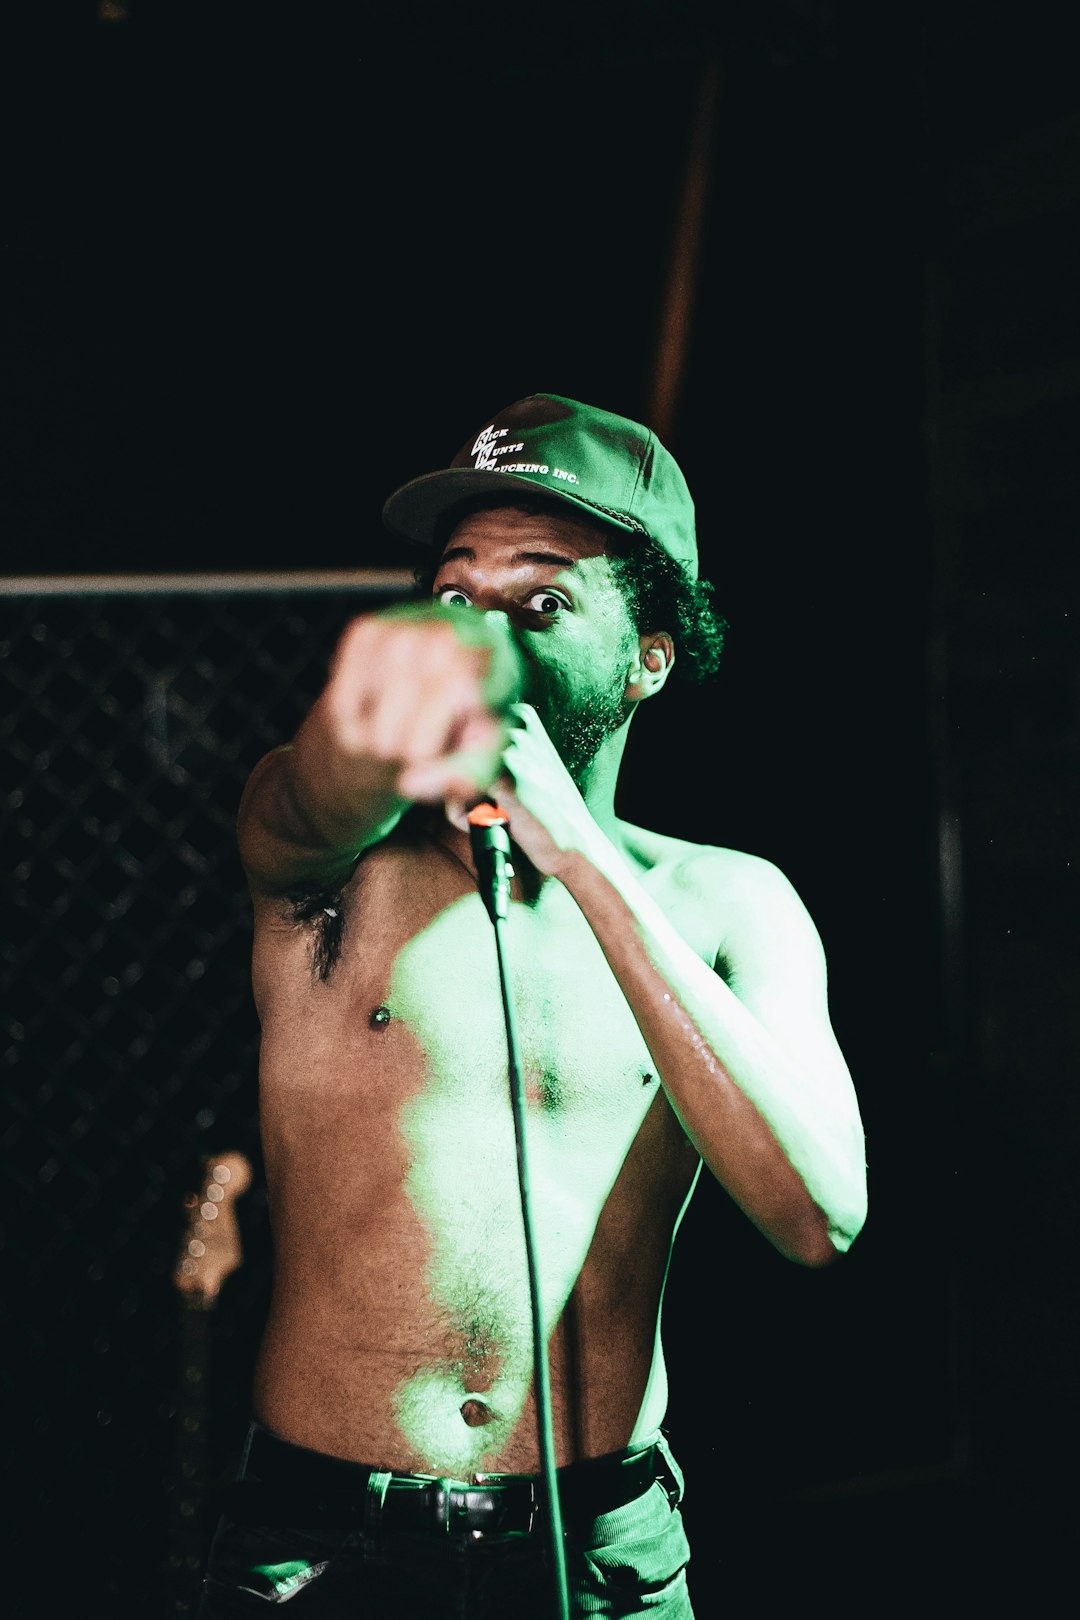 topless man wearing black cap holding microphone